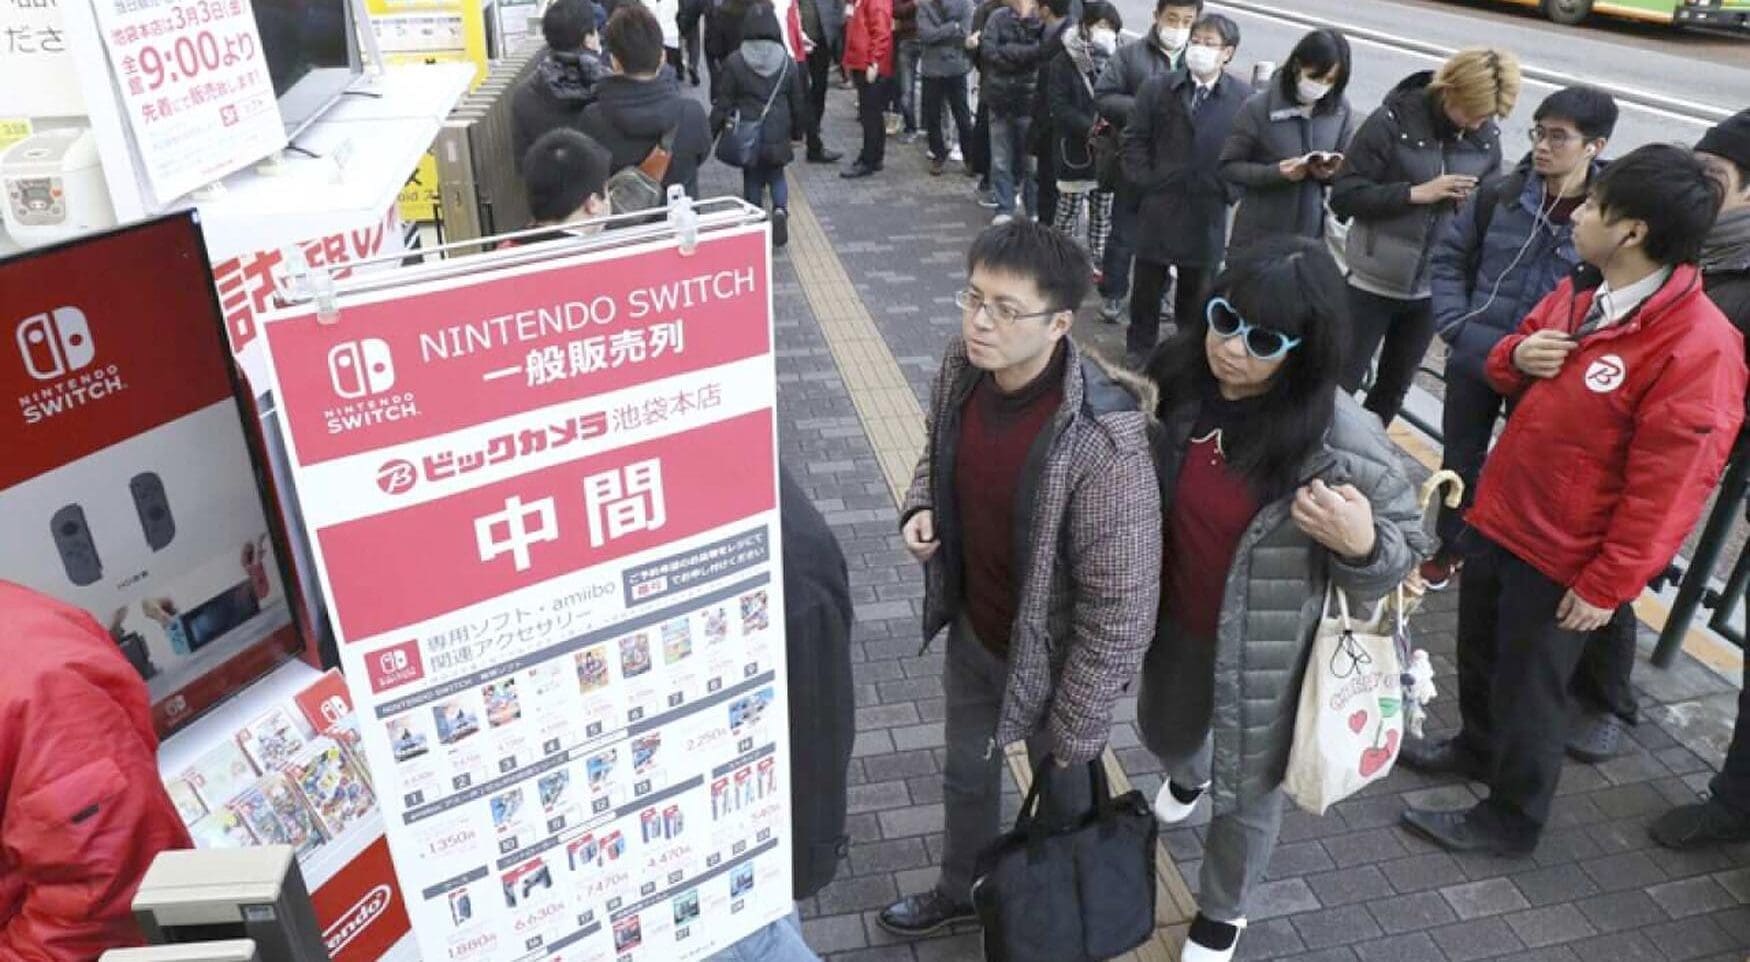 Nintendo Switch queue